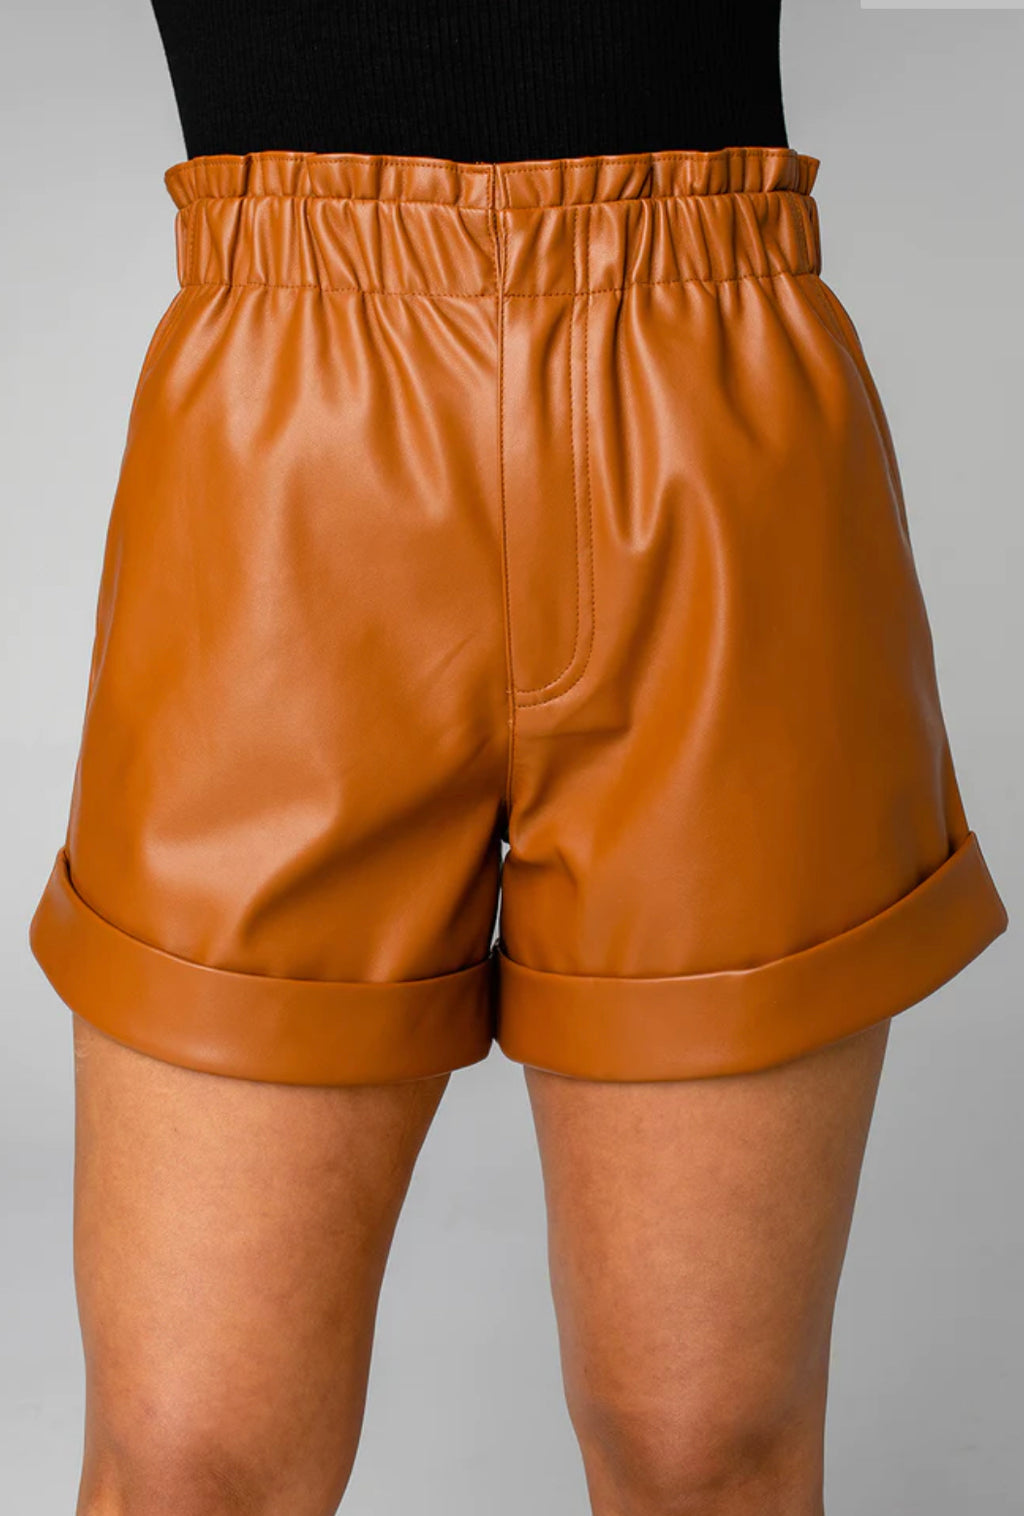 Mocha Vegan Leather Paperbag Shorts